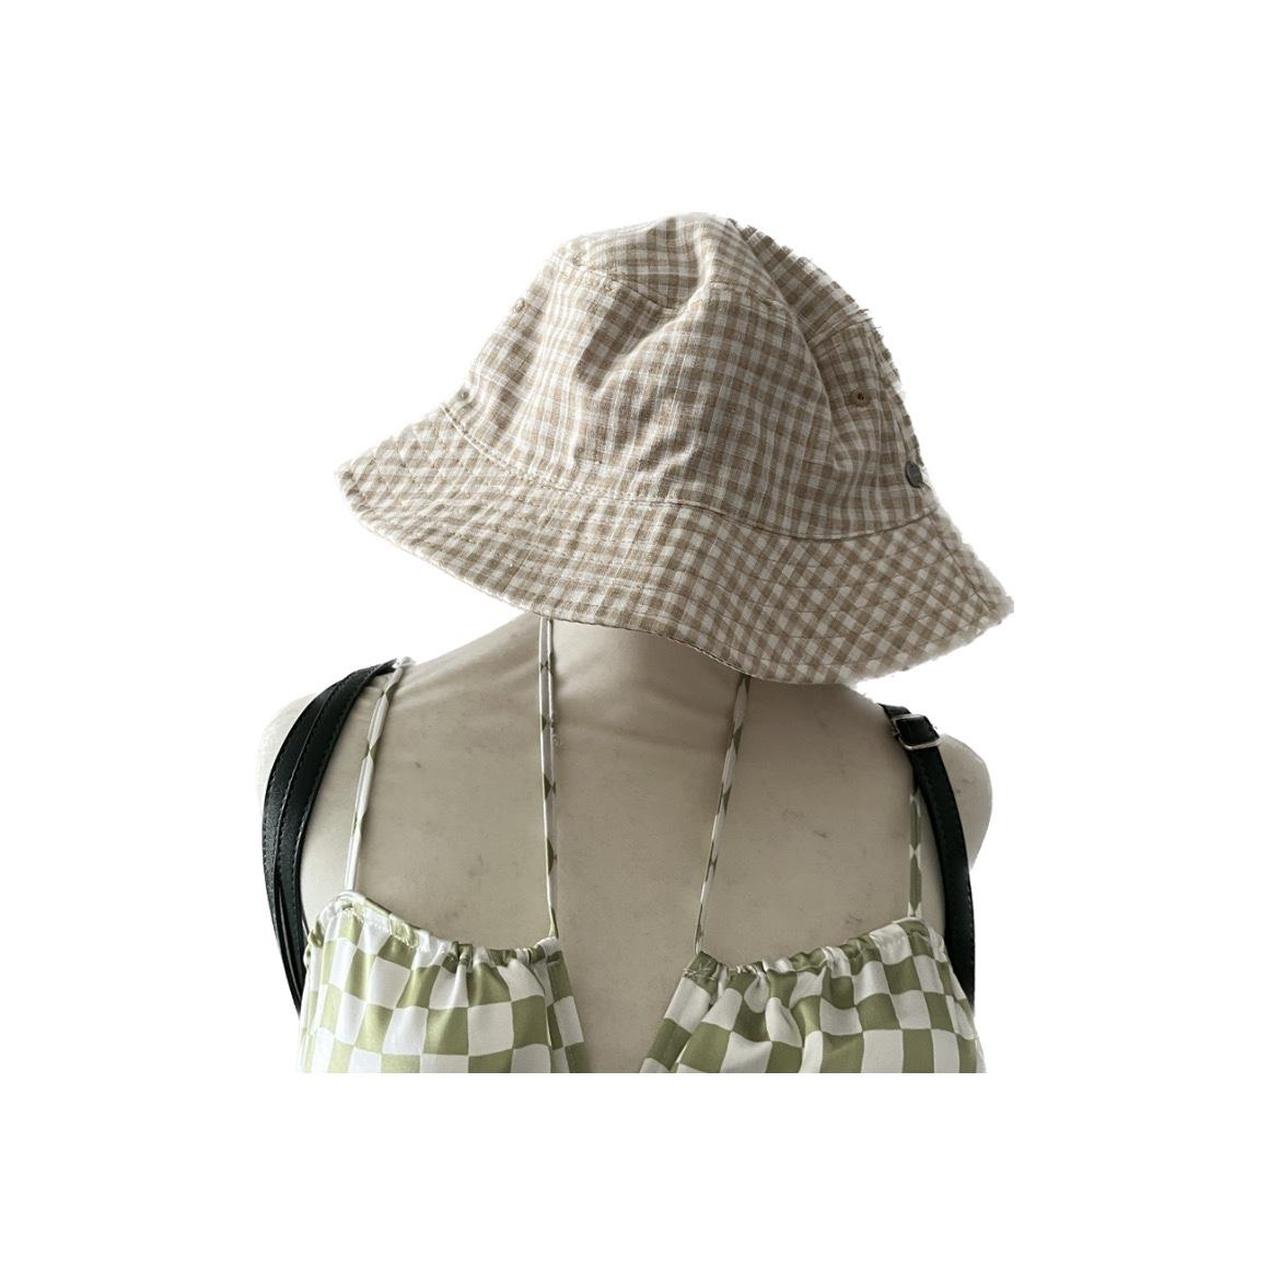 Brandy Melville Women's Cream and White Hat